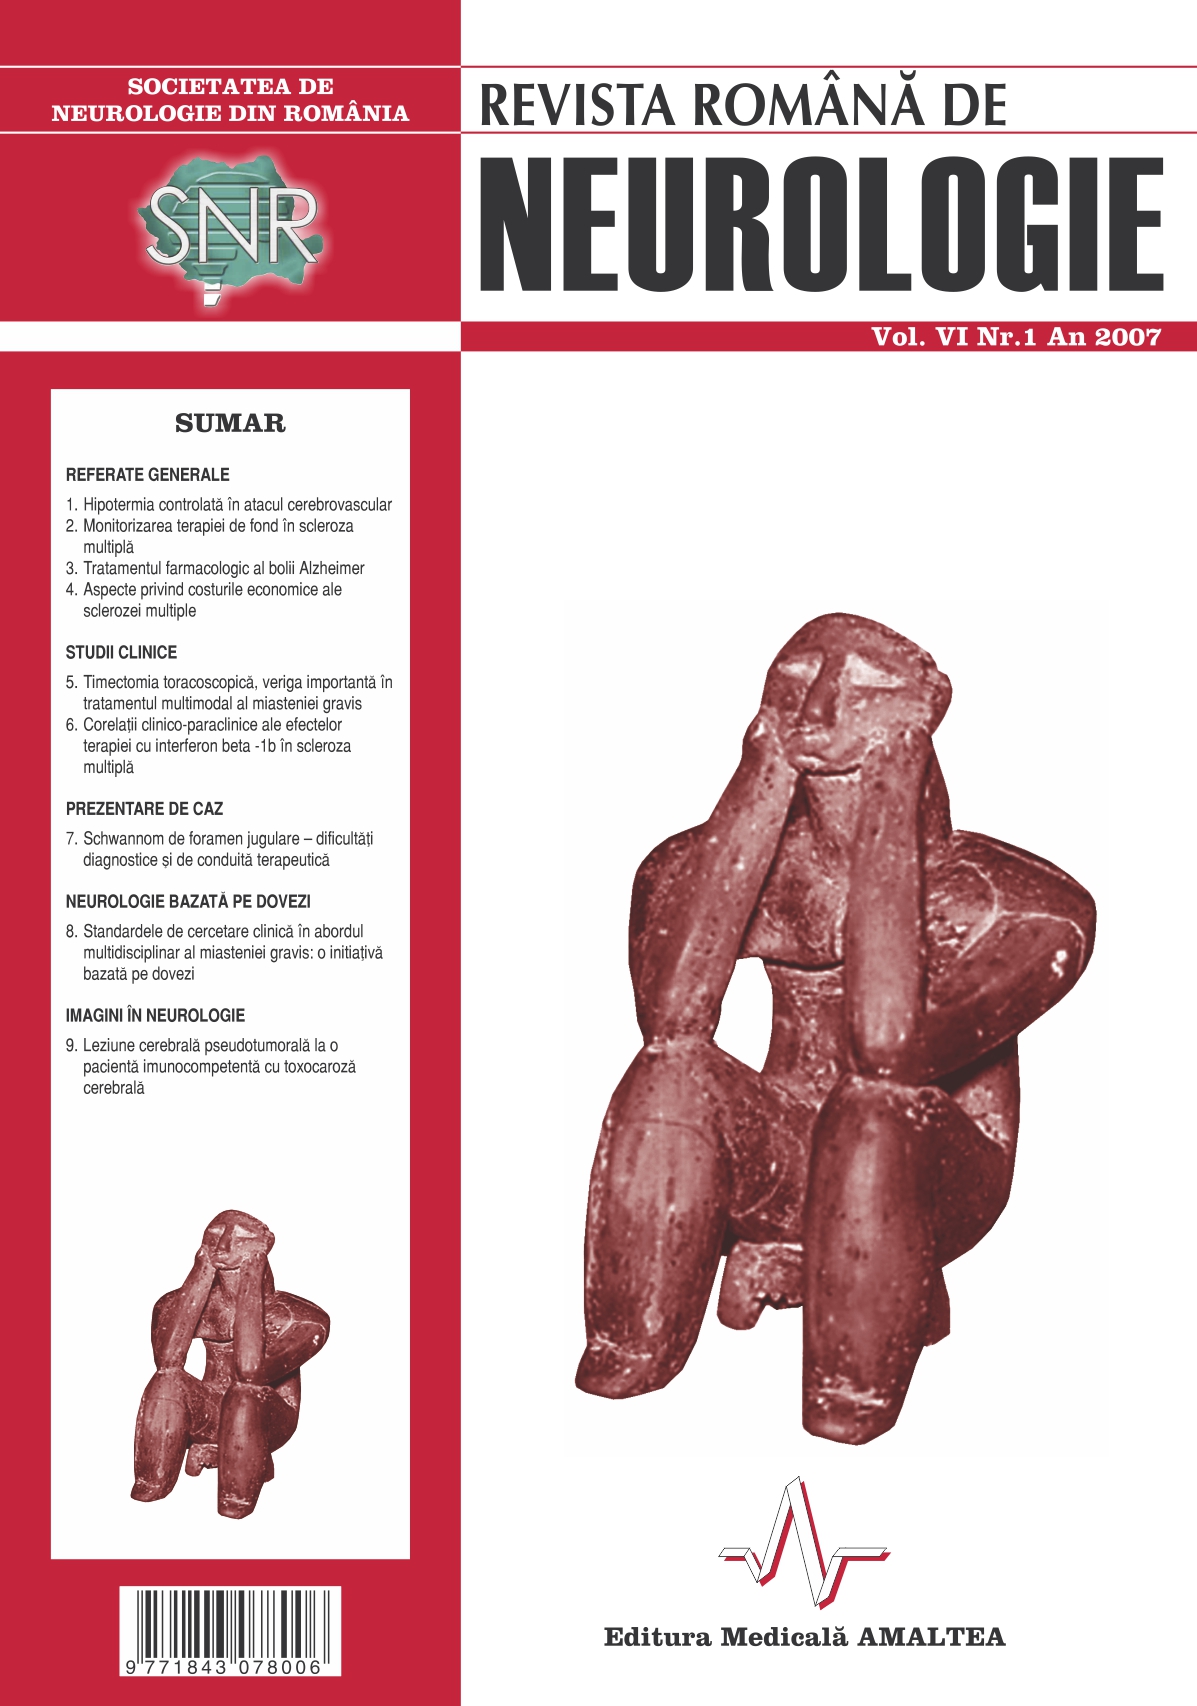 Romanian Journal of Neurology, Volume VI, No. 1, 2007